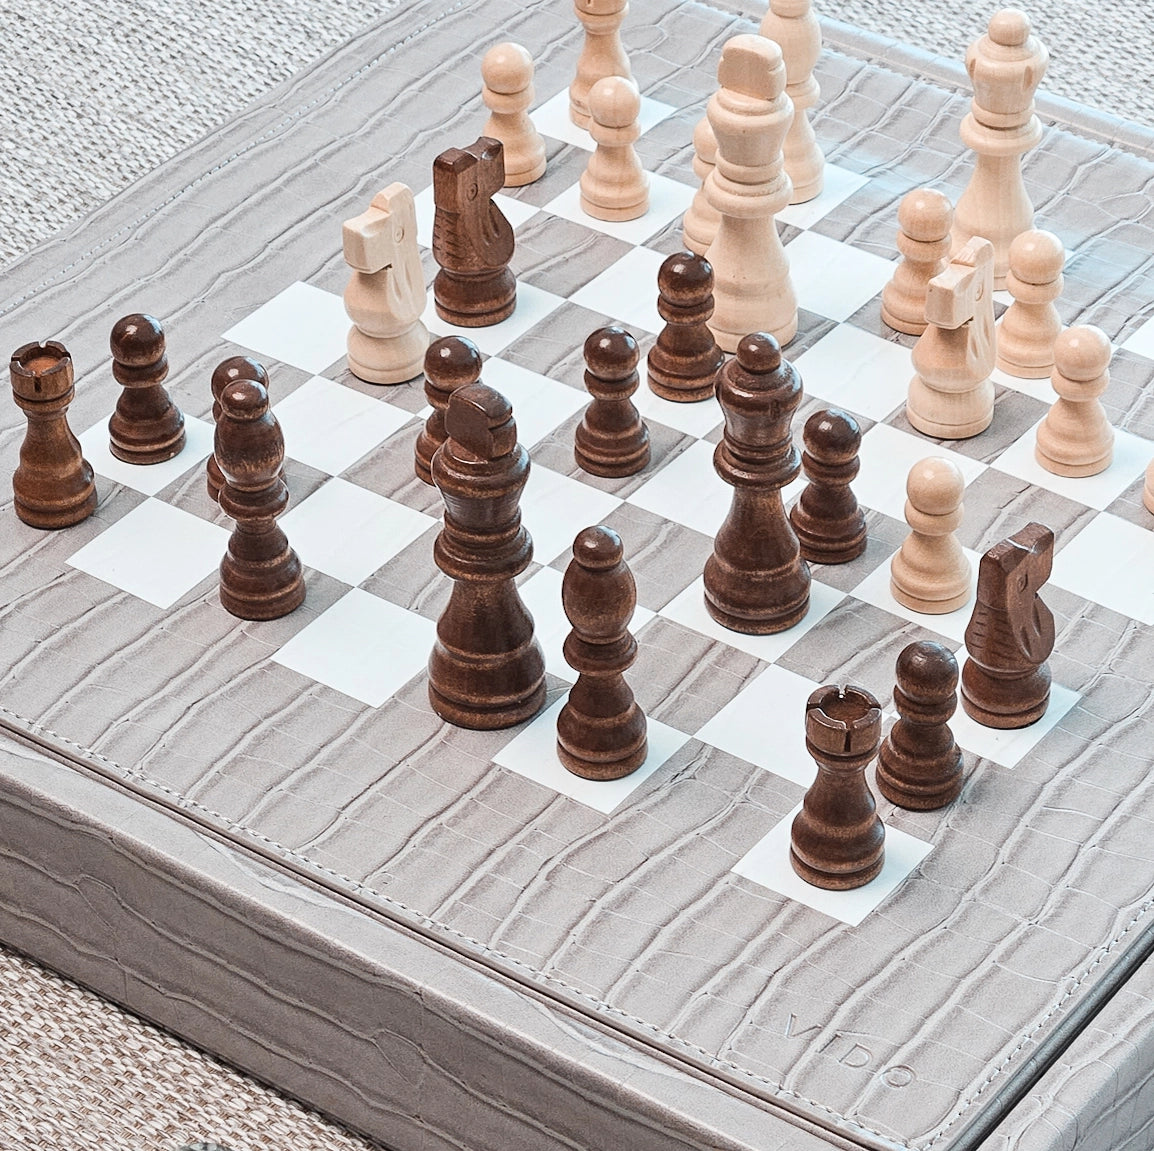 Mouse Grey Alligator Chess Set - VIDO USA